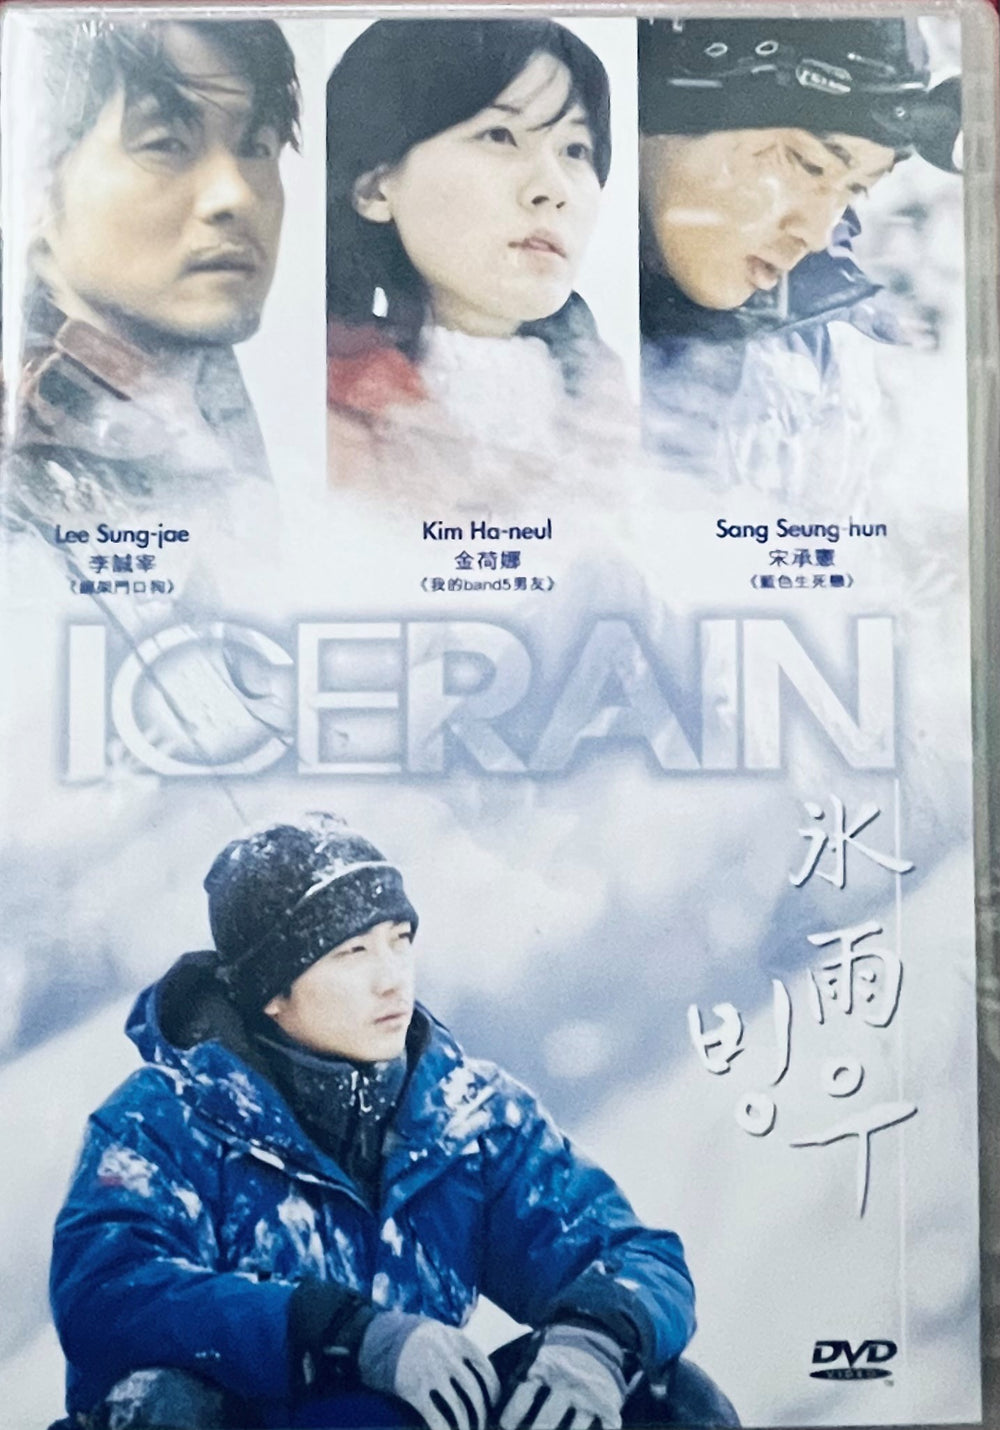 ICE RAIN 冰雨 2004 (Korean Movie) DVD ENGLISH SUBTITLES (REGION 3)